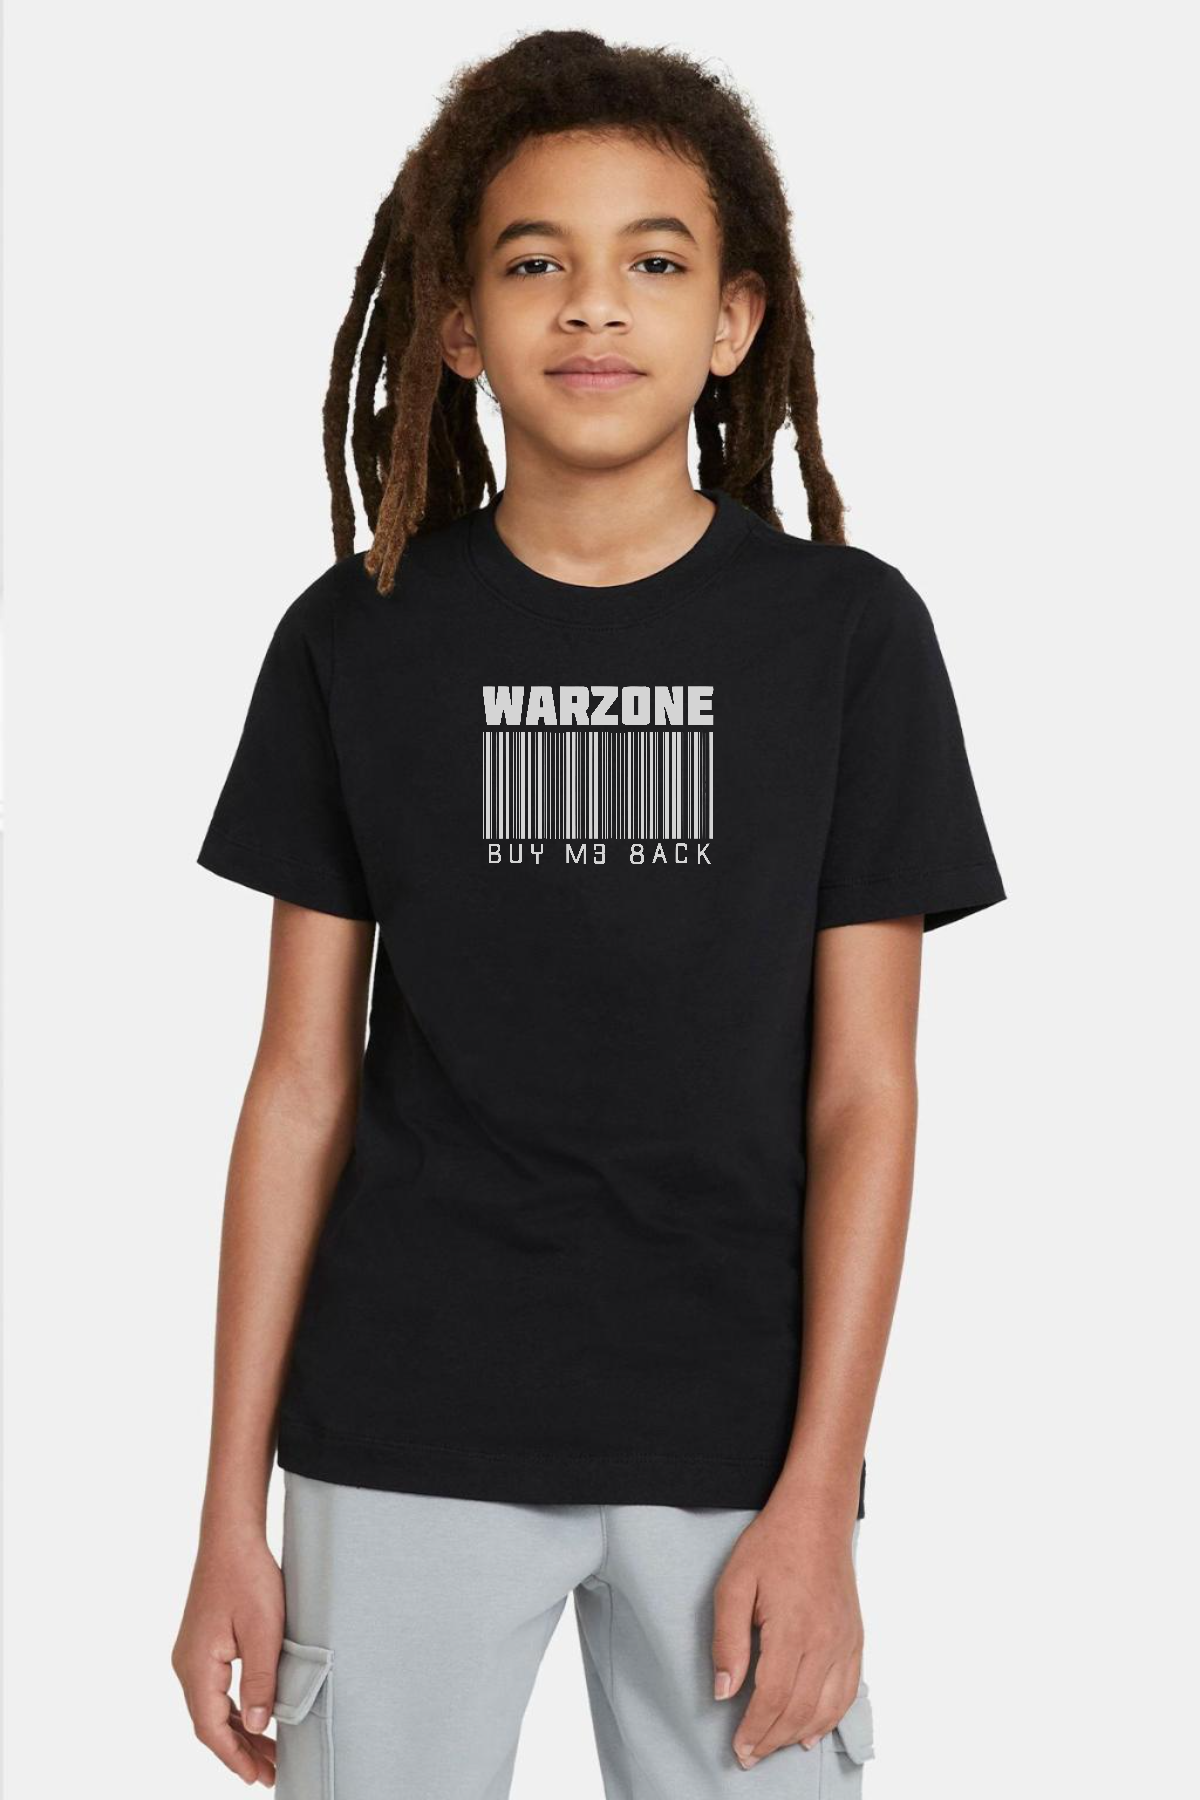 Call Of Duty Warzone Buy Me Back Siyah Çocuk Tshirt